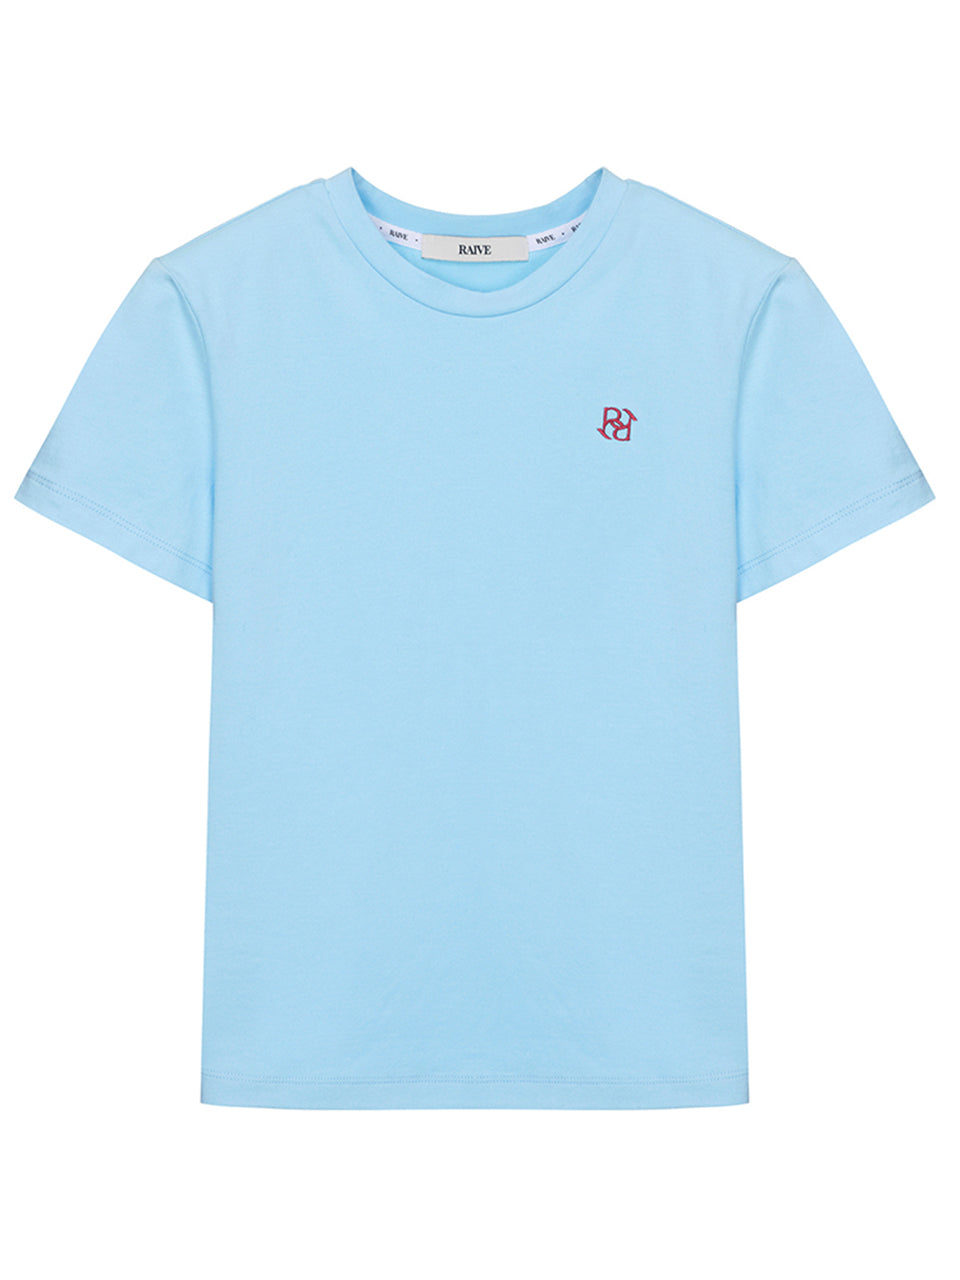 RAIVE Logo Symbol T-shirt in S/Blue